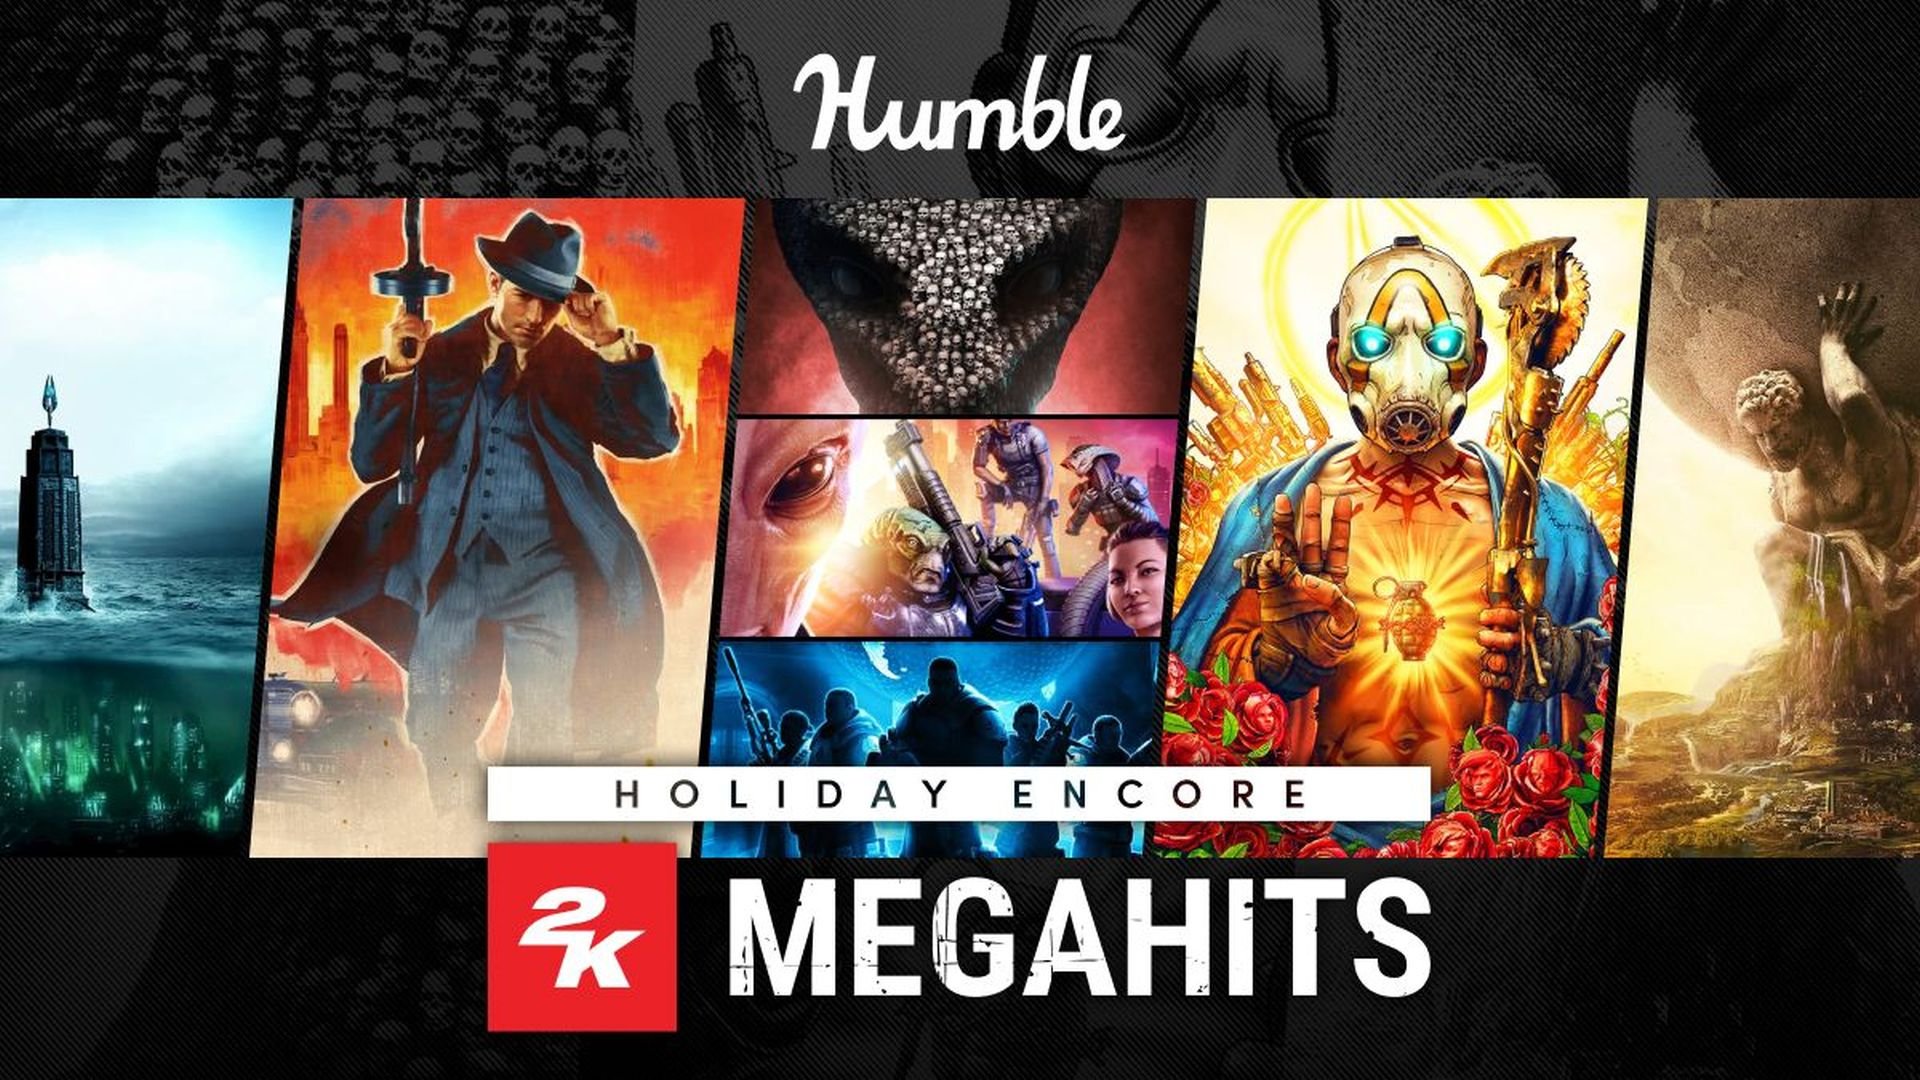 Humble Bundle are bringing back popular limited bundles throughout